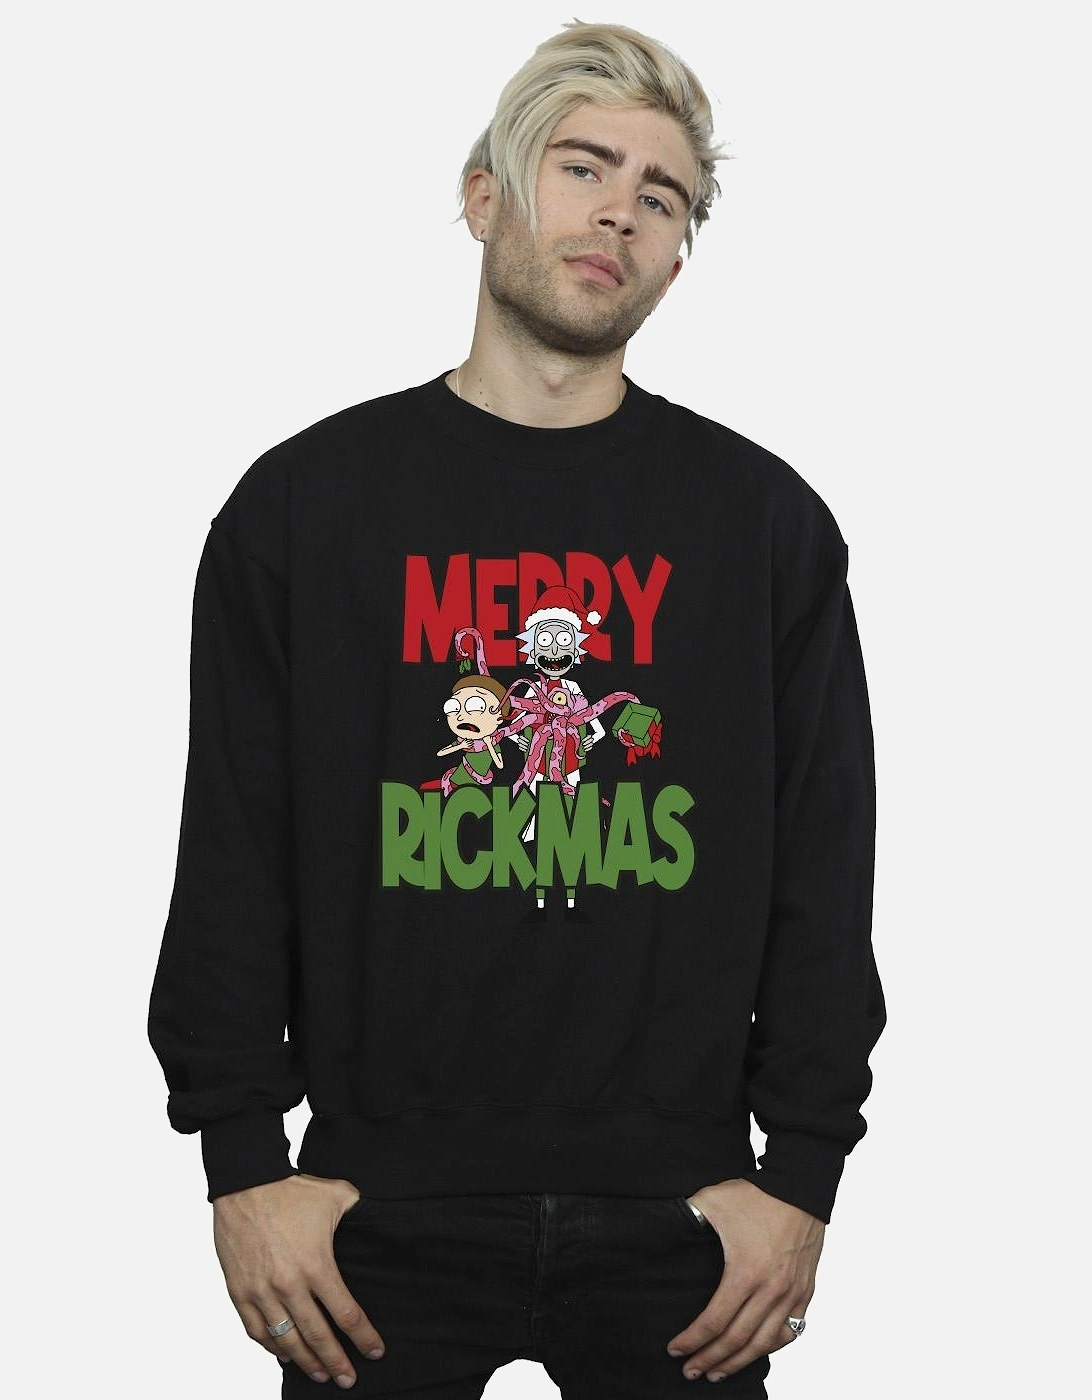 Mens Merry Rickmas Sweatshirt, 4 of 3